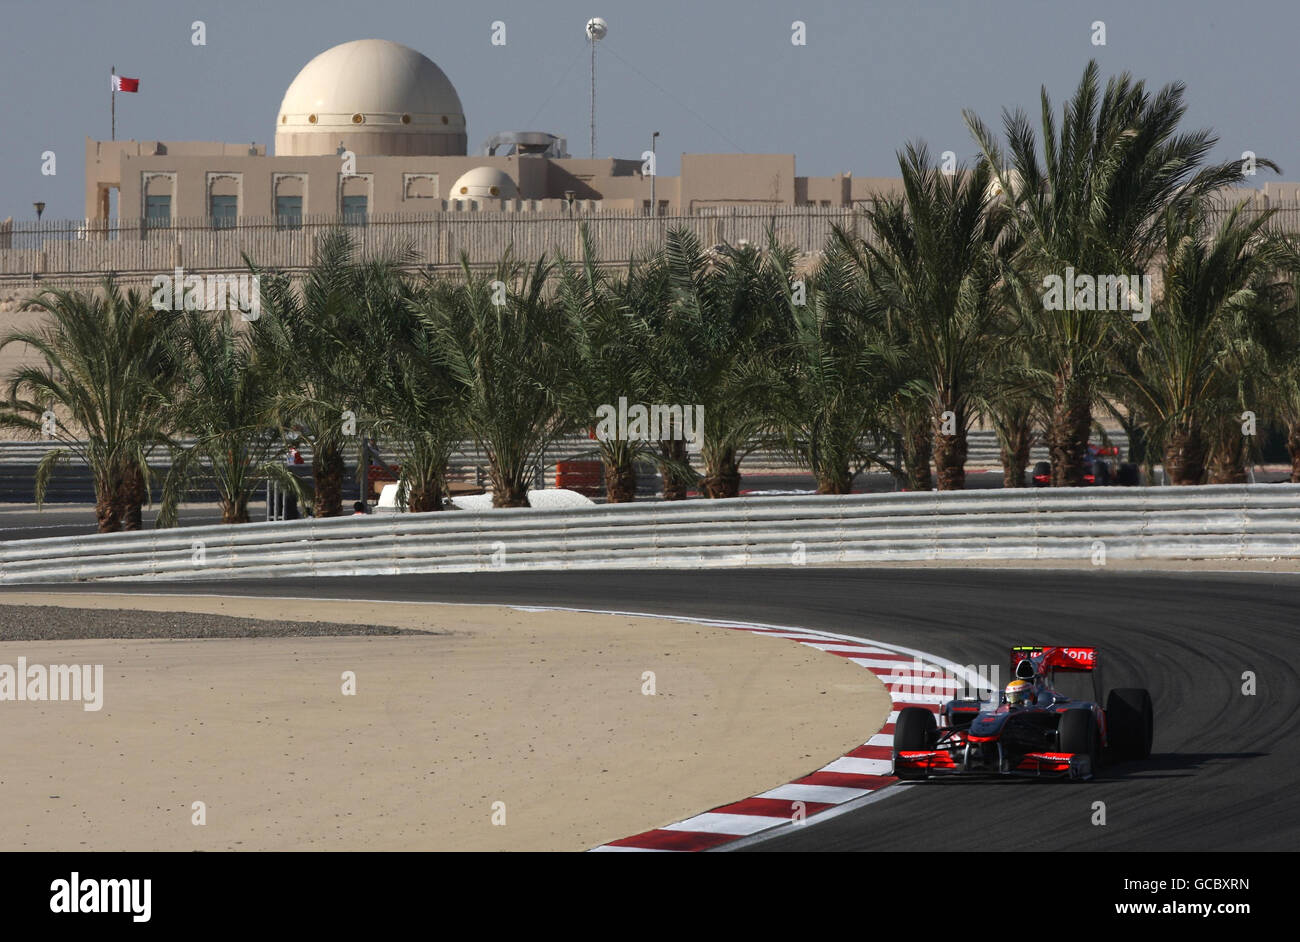 Lewis Hamilton della McLaren si è portato al terzo posto durante il Gulf Air Bahrain Grand Prix al Bahrain International Circuit di Sakhir, Bahrain. Foto Stock